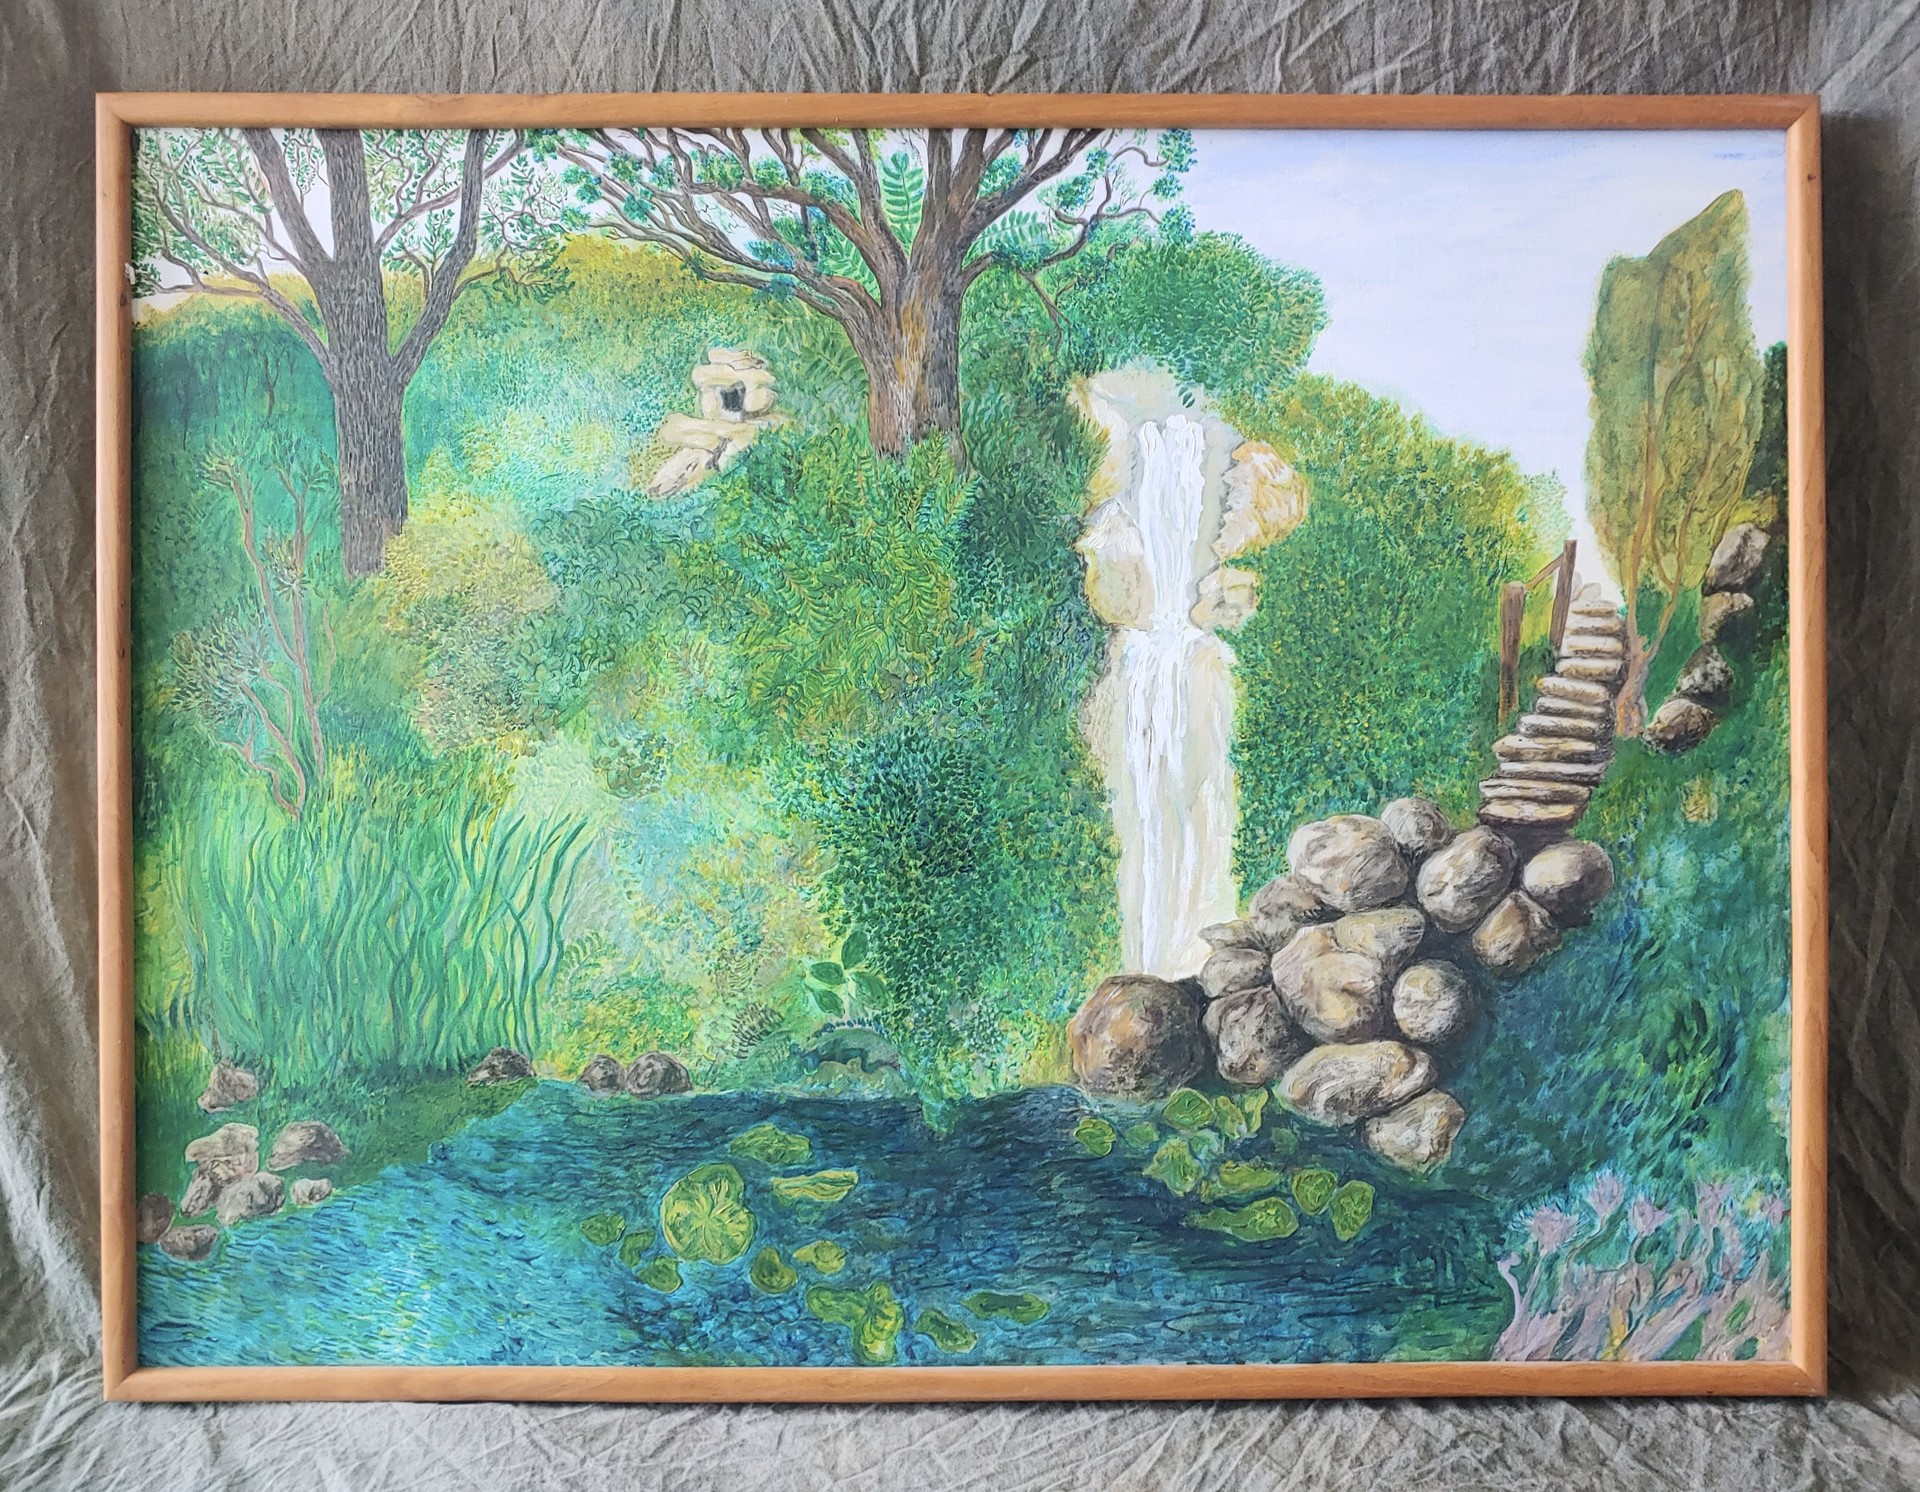 Zilker Falls - Painting by David Amdur